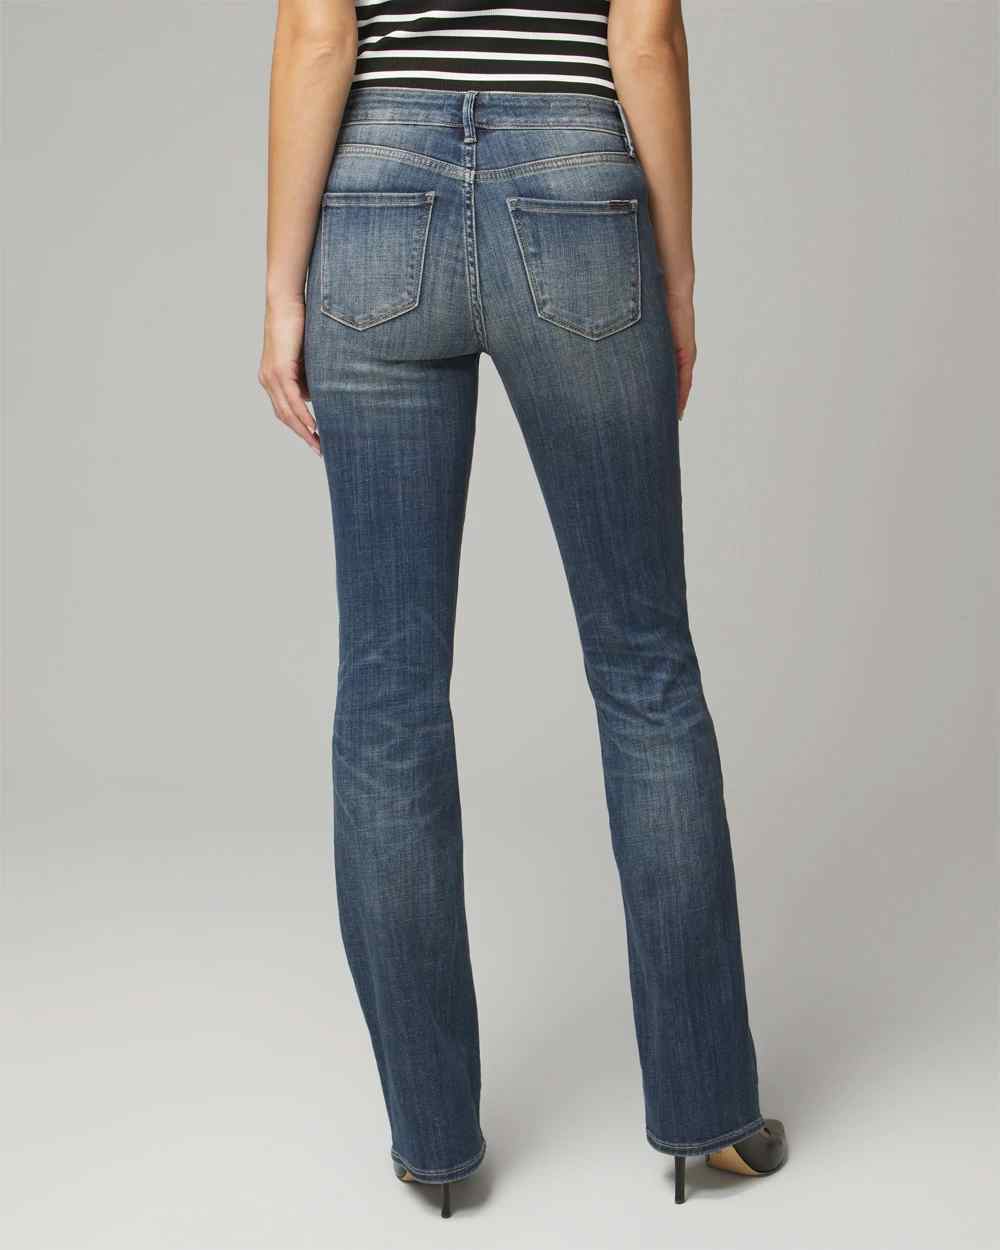 Shop New Women's Jeans & Denim: New Arrivals | White House Black Market